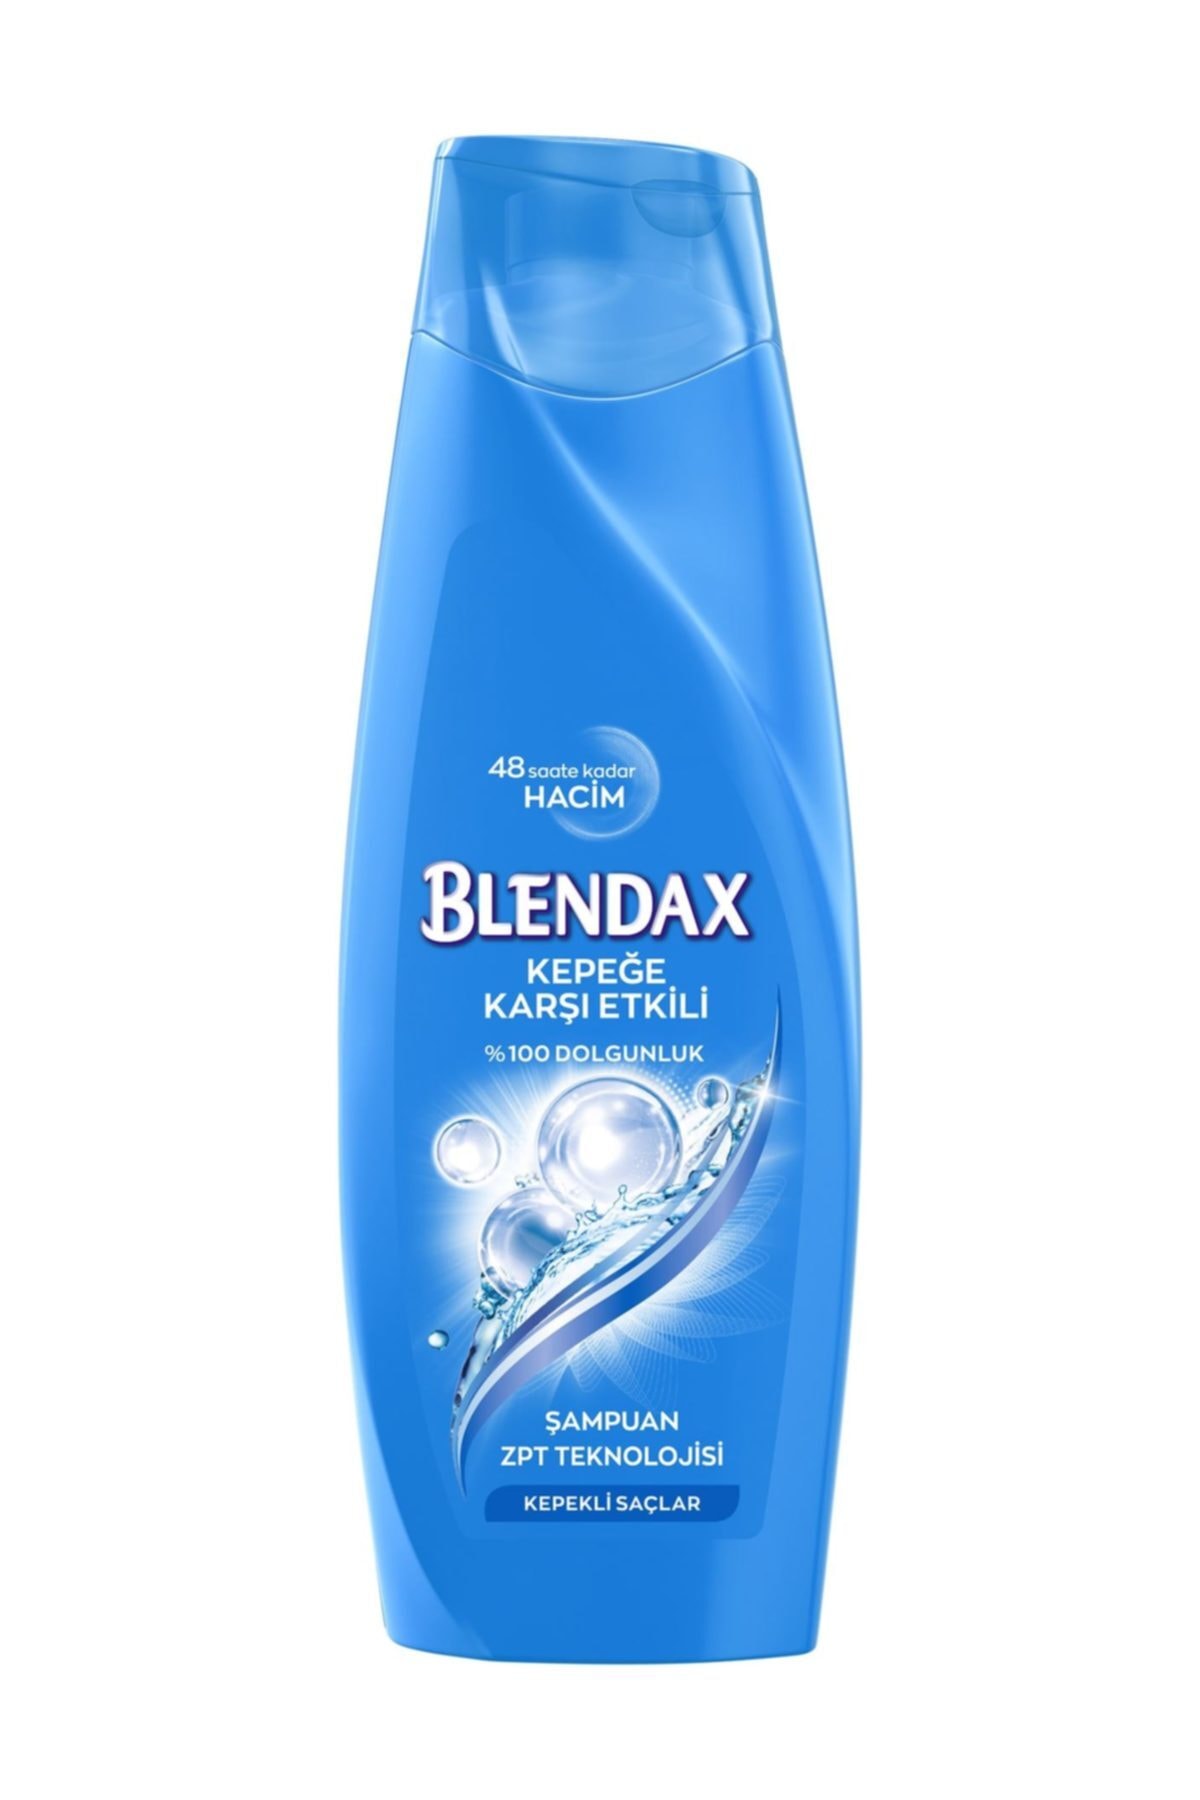 Blendax Kepeğe Karşi Etkili Şampuan 180 Ml